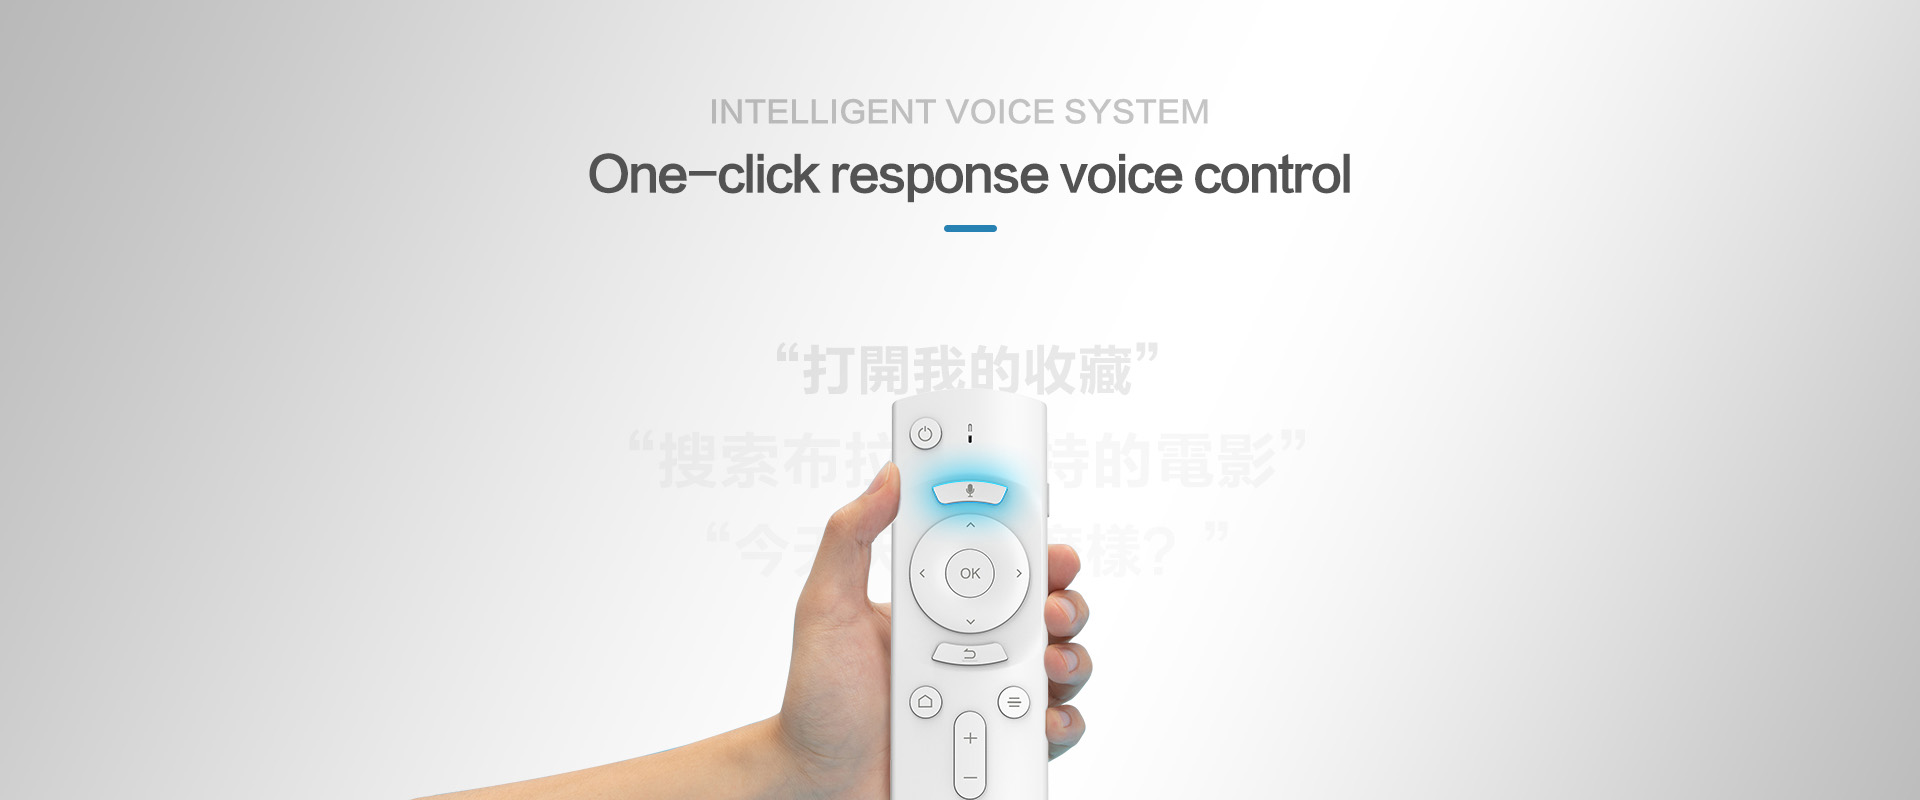 Desbloqueo original de la caja de TV Control remoto por voz para Ubox Gen 8 a Gen 9